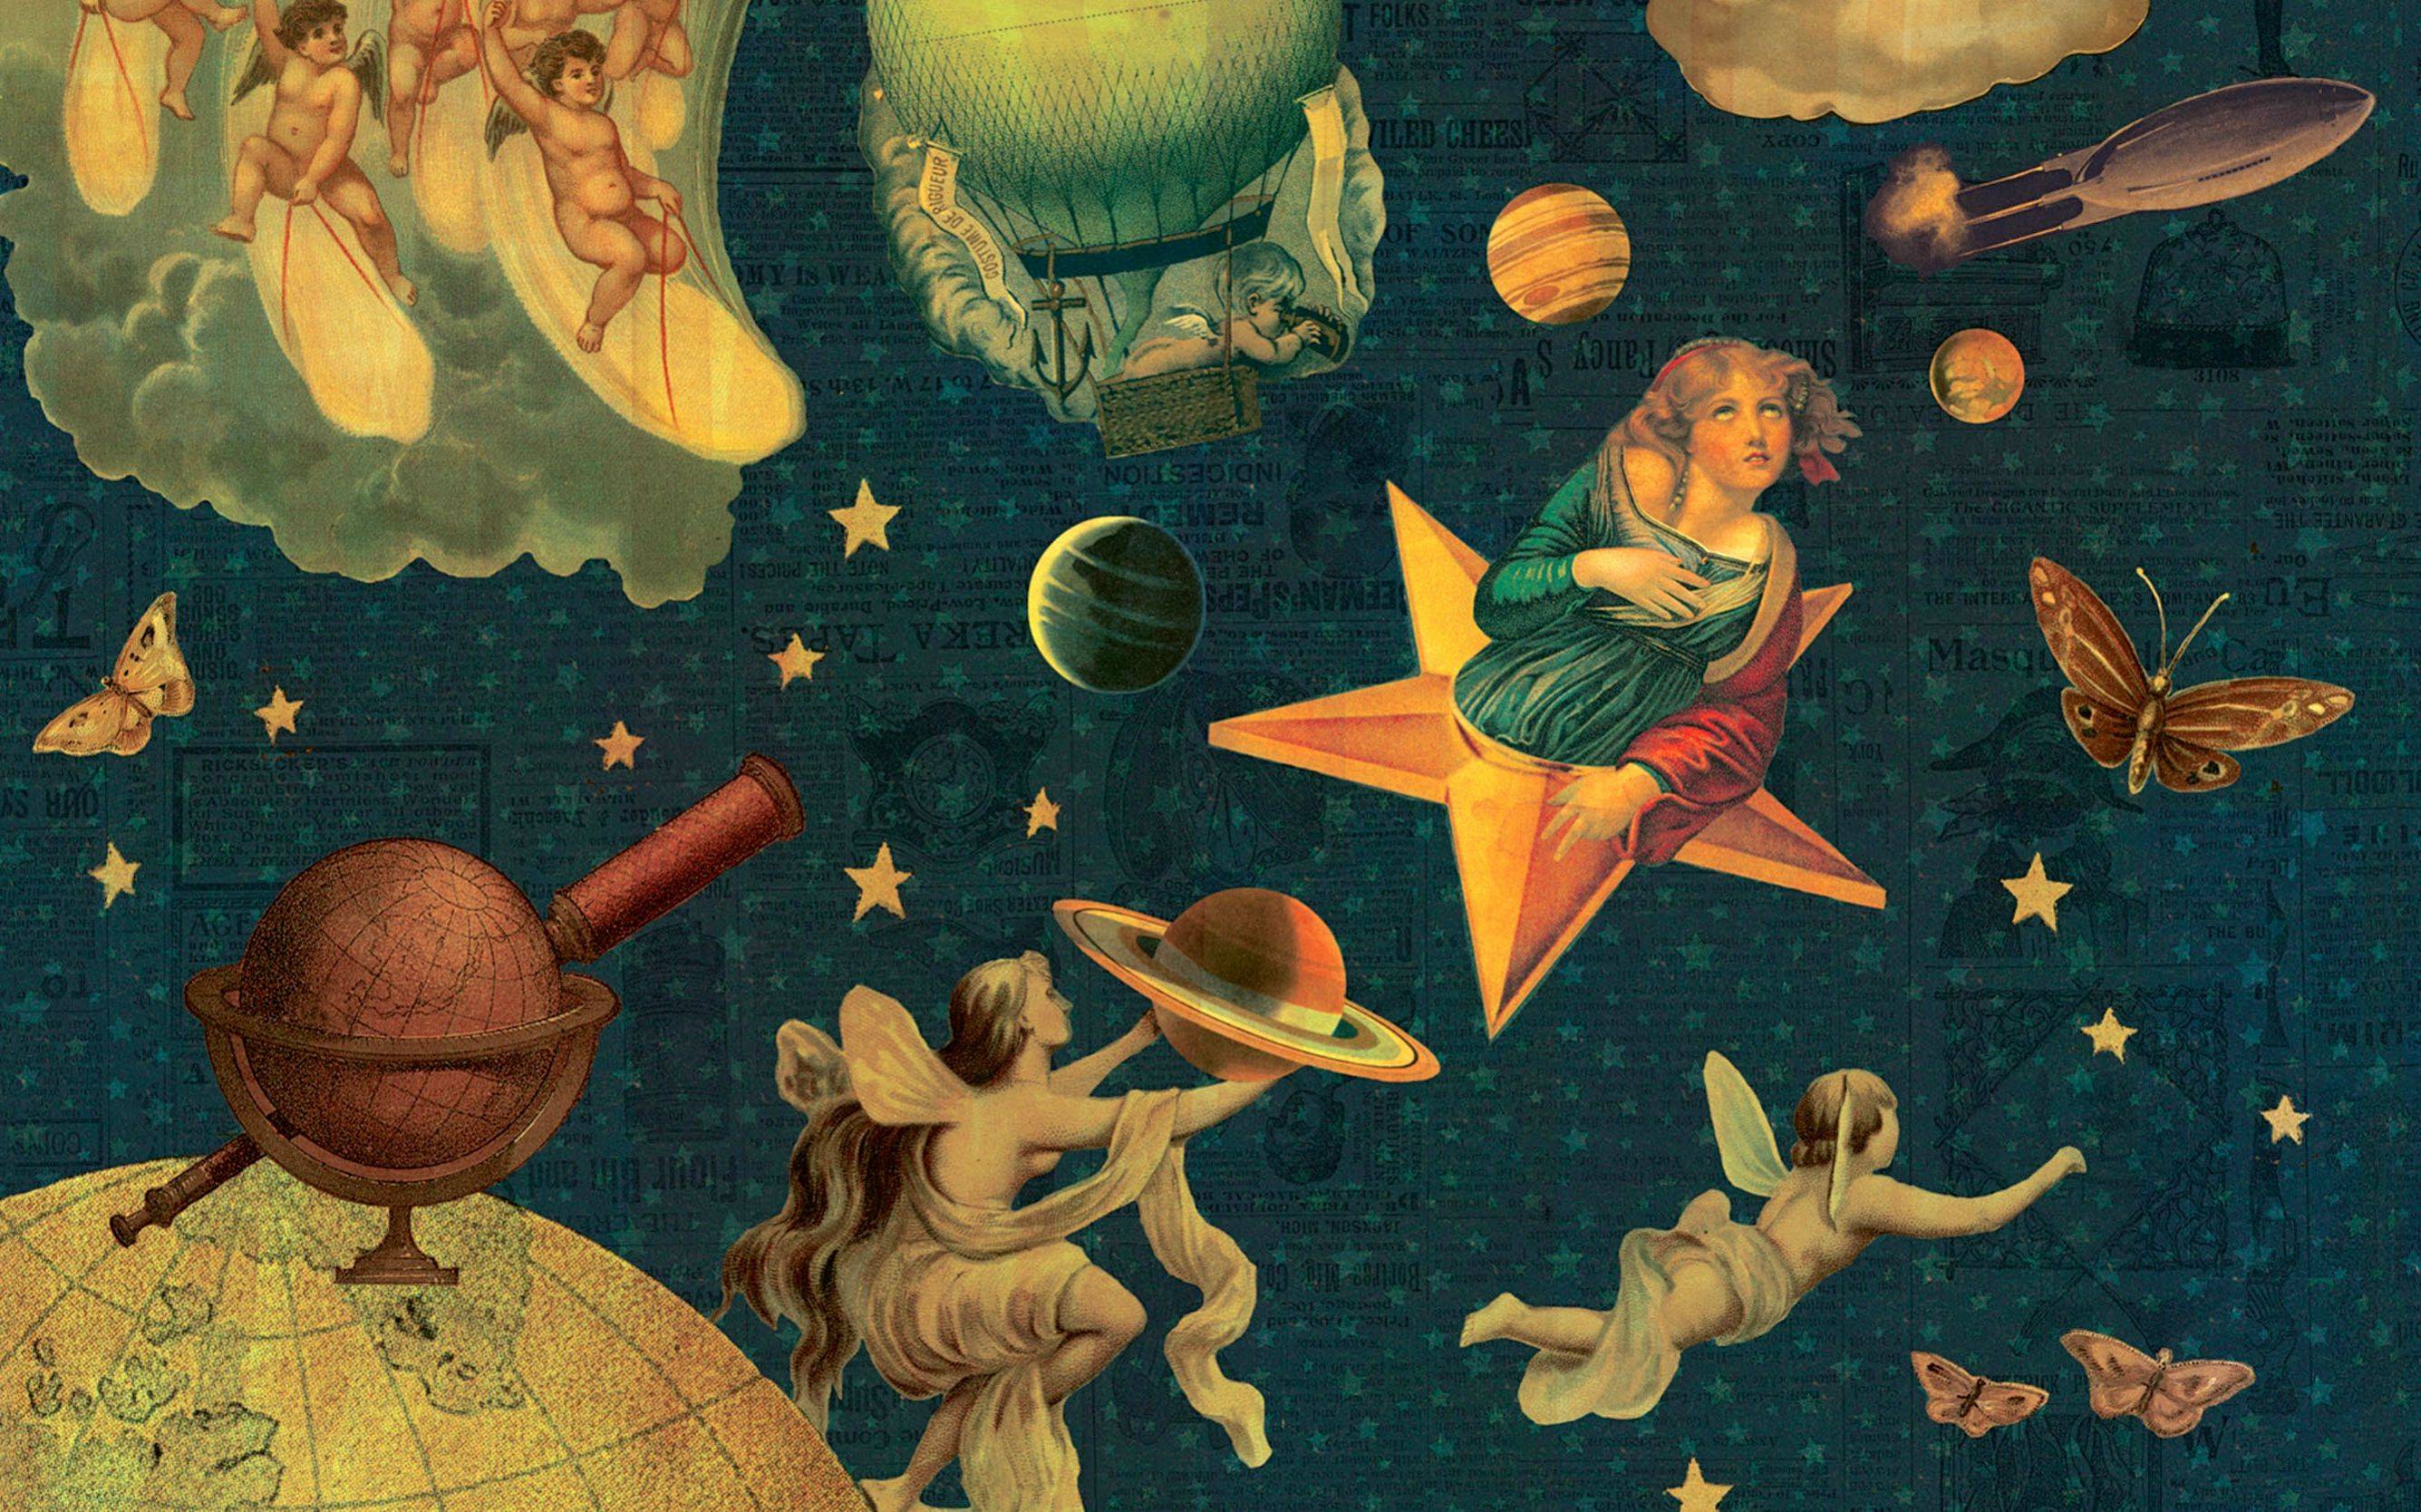 Mellon Collie and the Infinite Sadness (Smashing Pumpkins) album art